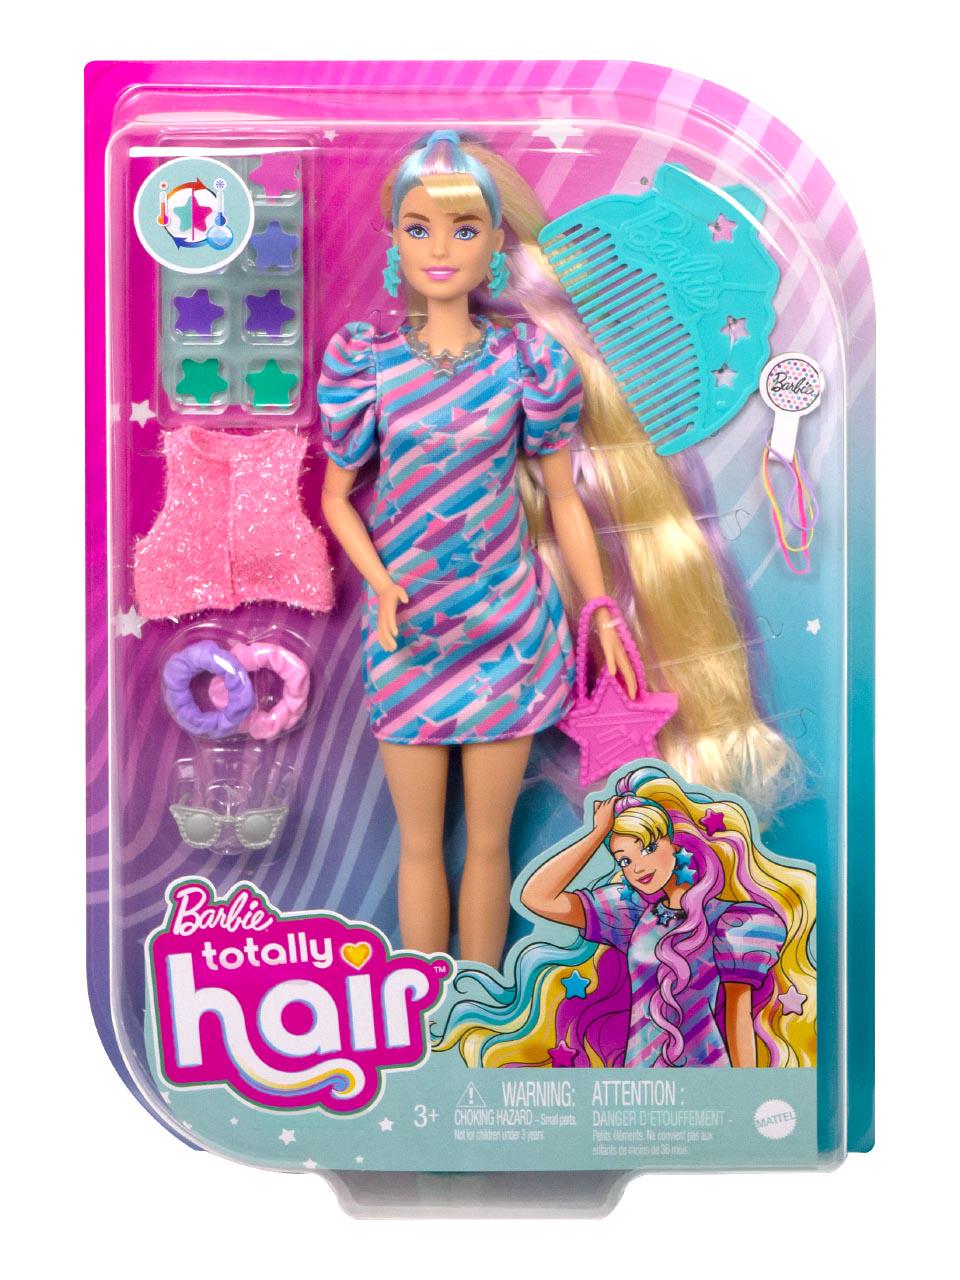 | Totally Online Airport Barbie, Frankfurt Shopping Hair